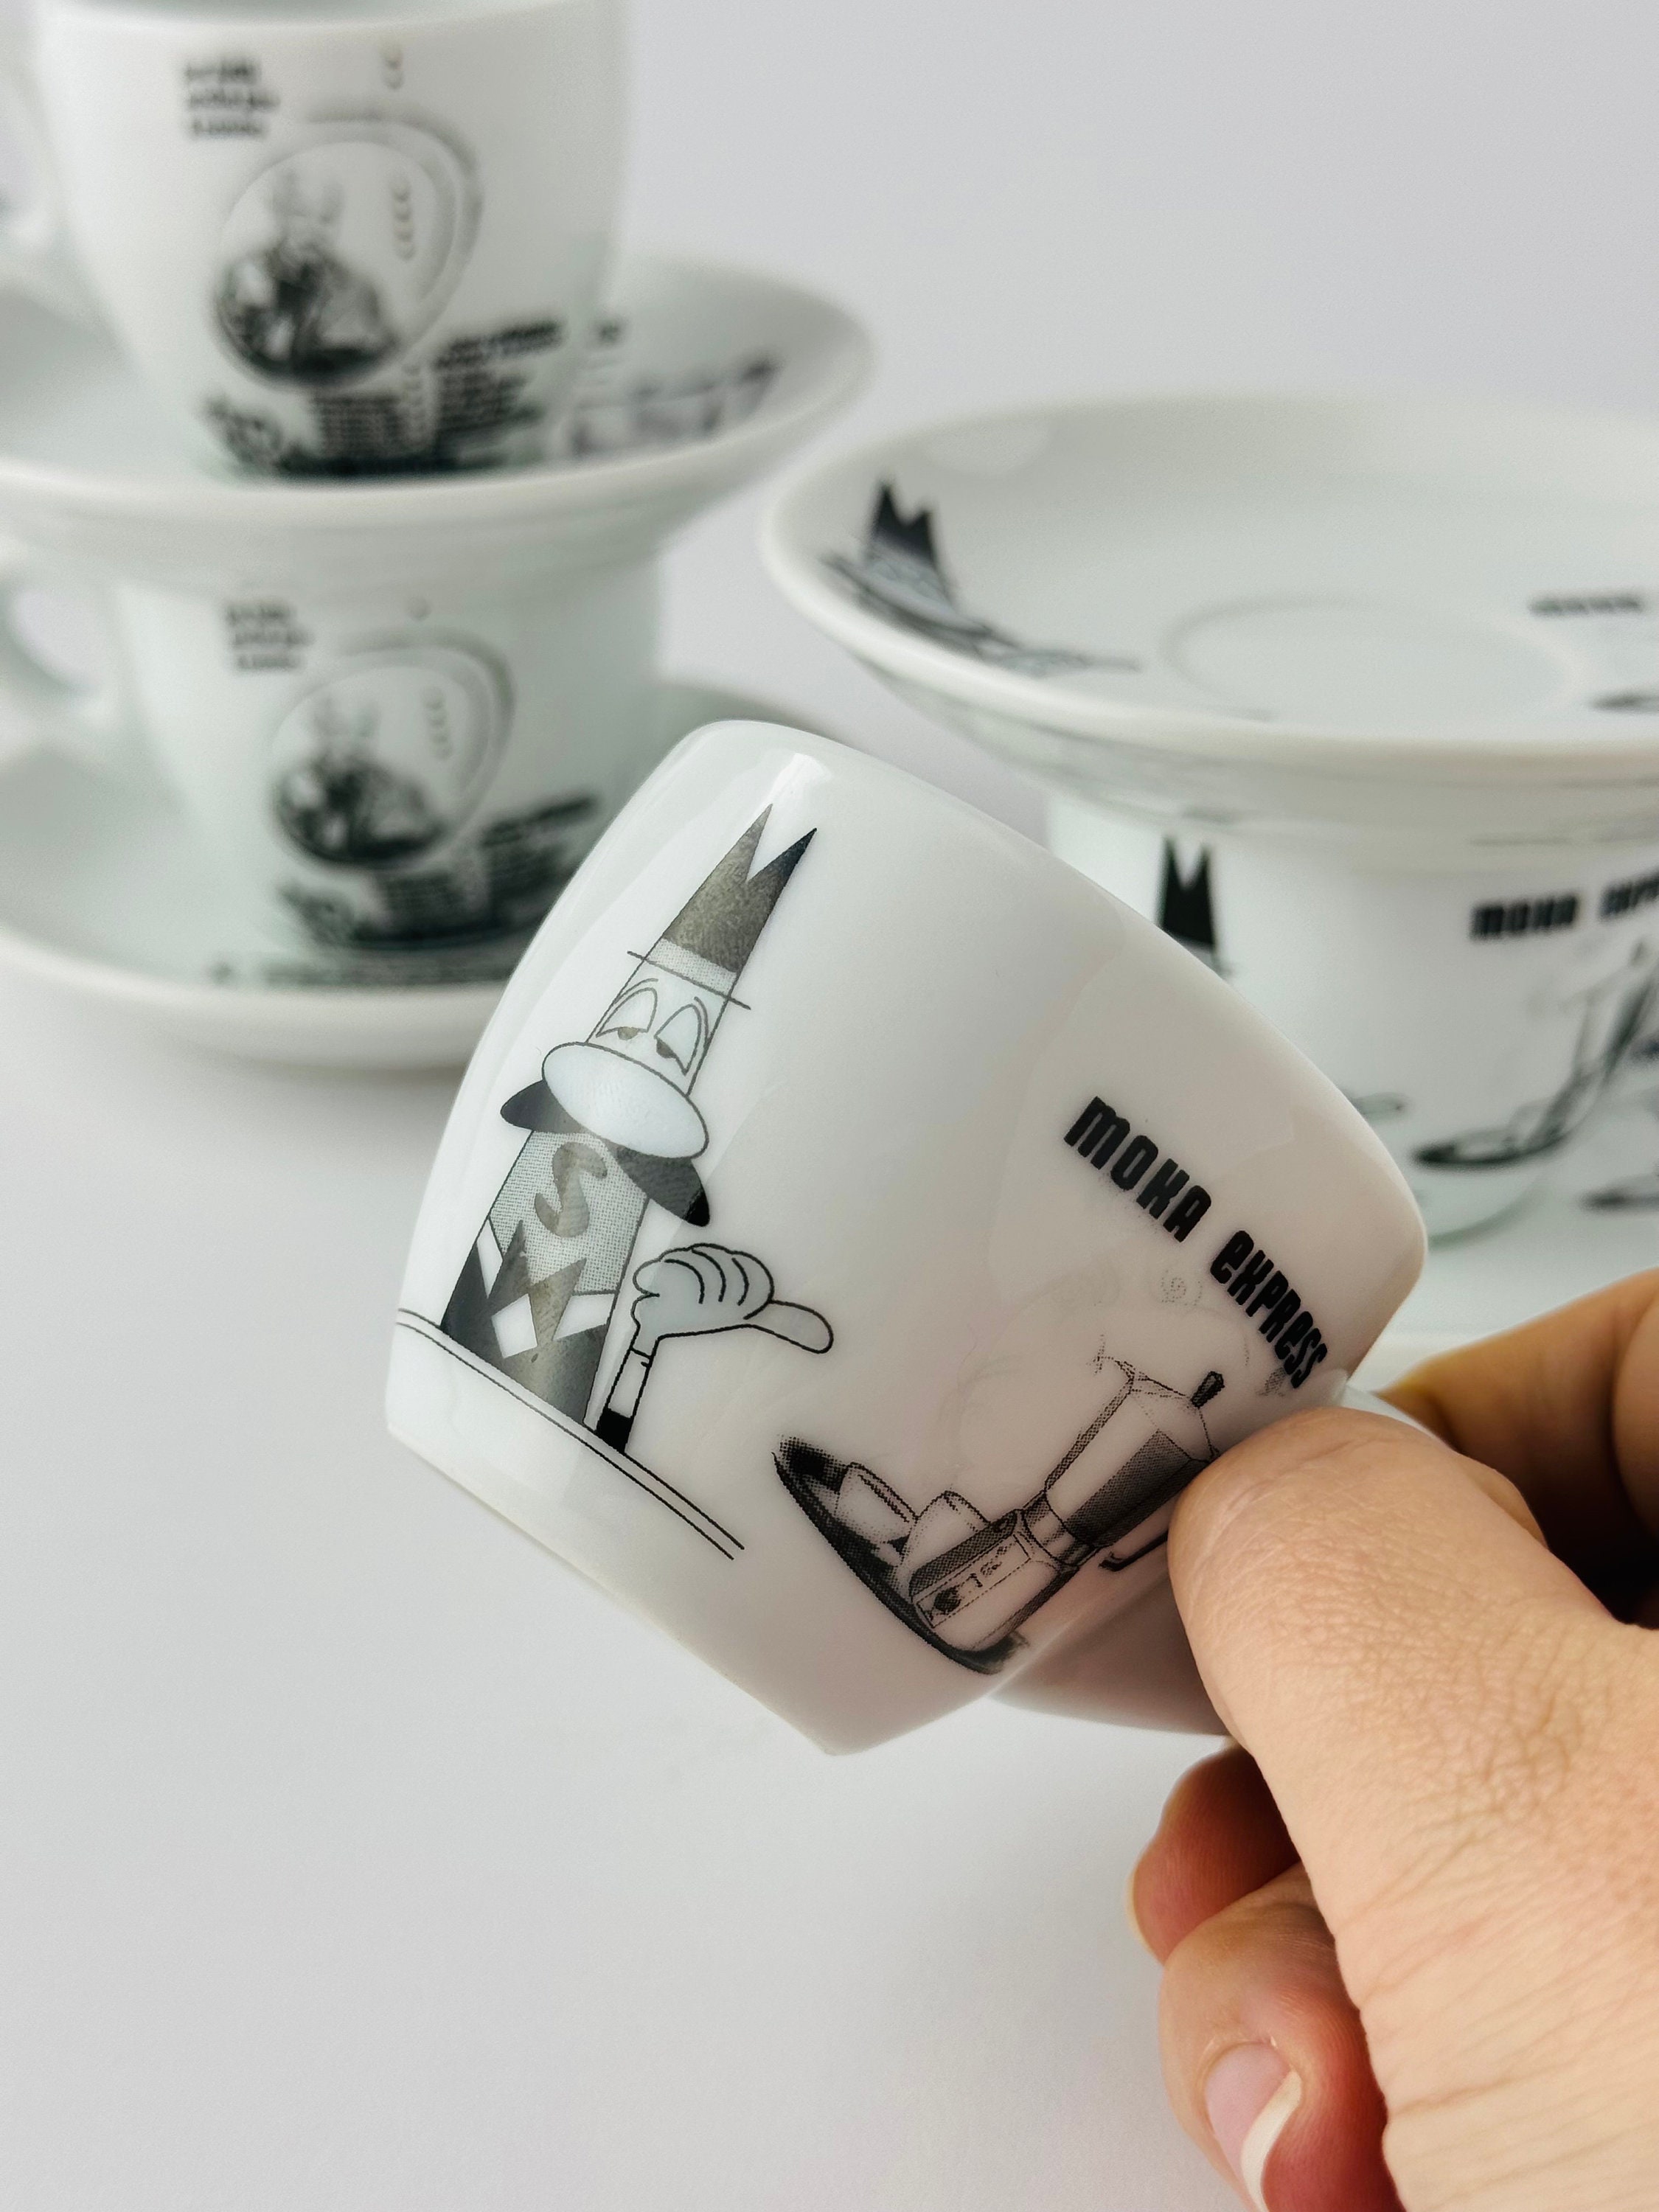 Bialetti Octagonal Espresso Cups, Set of 4, white / silver